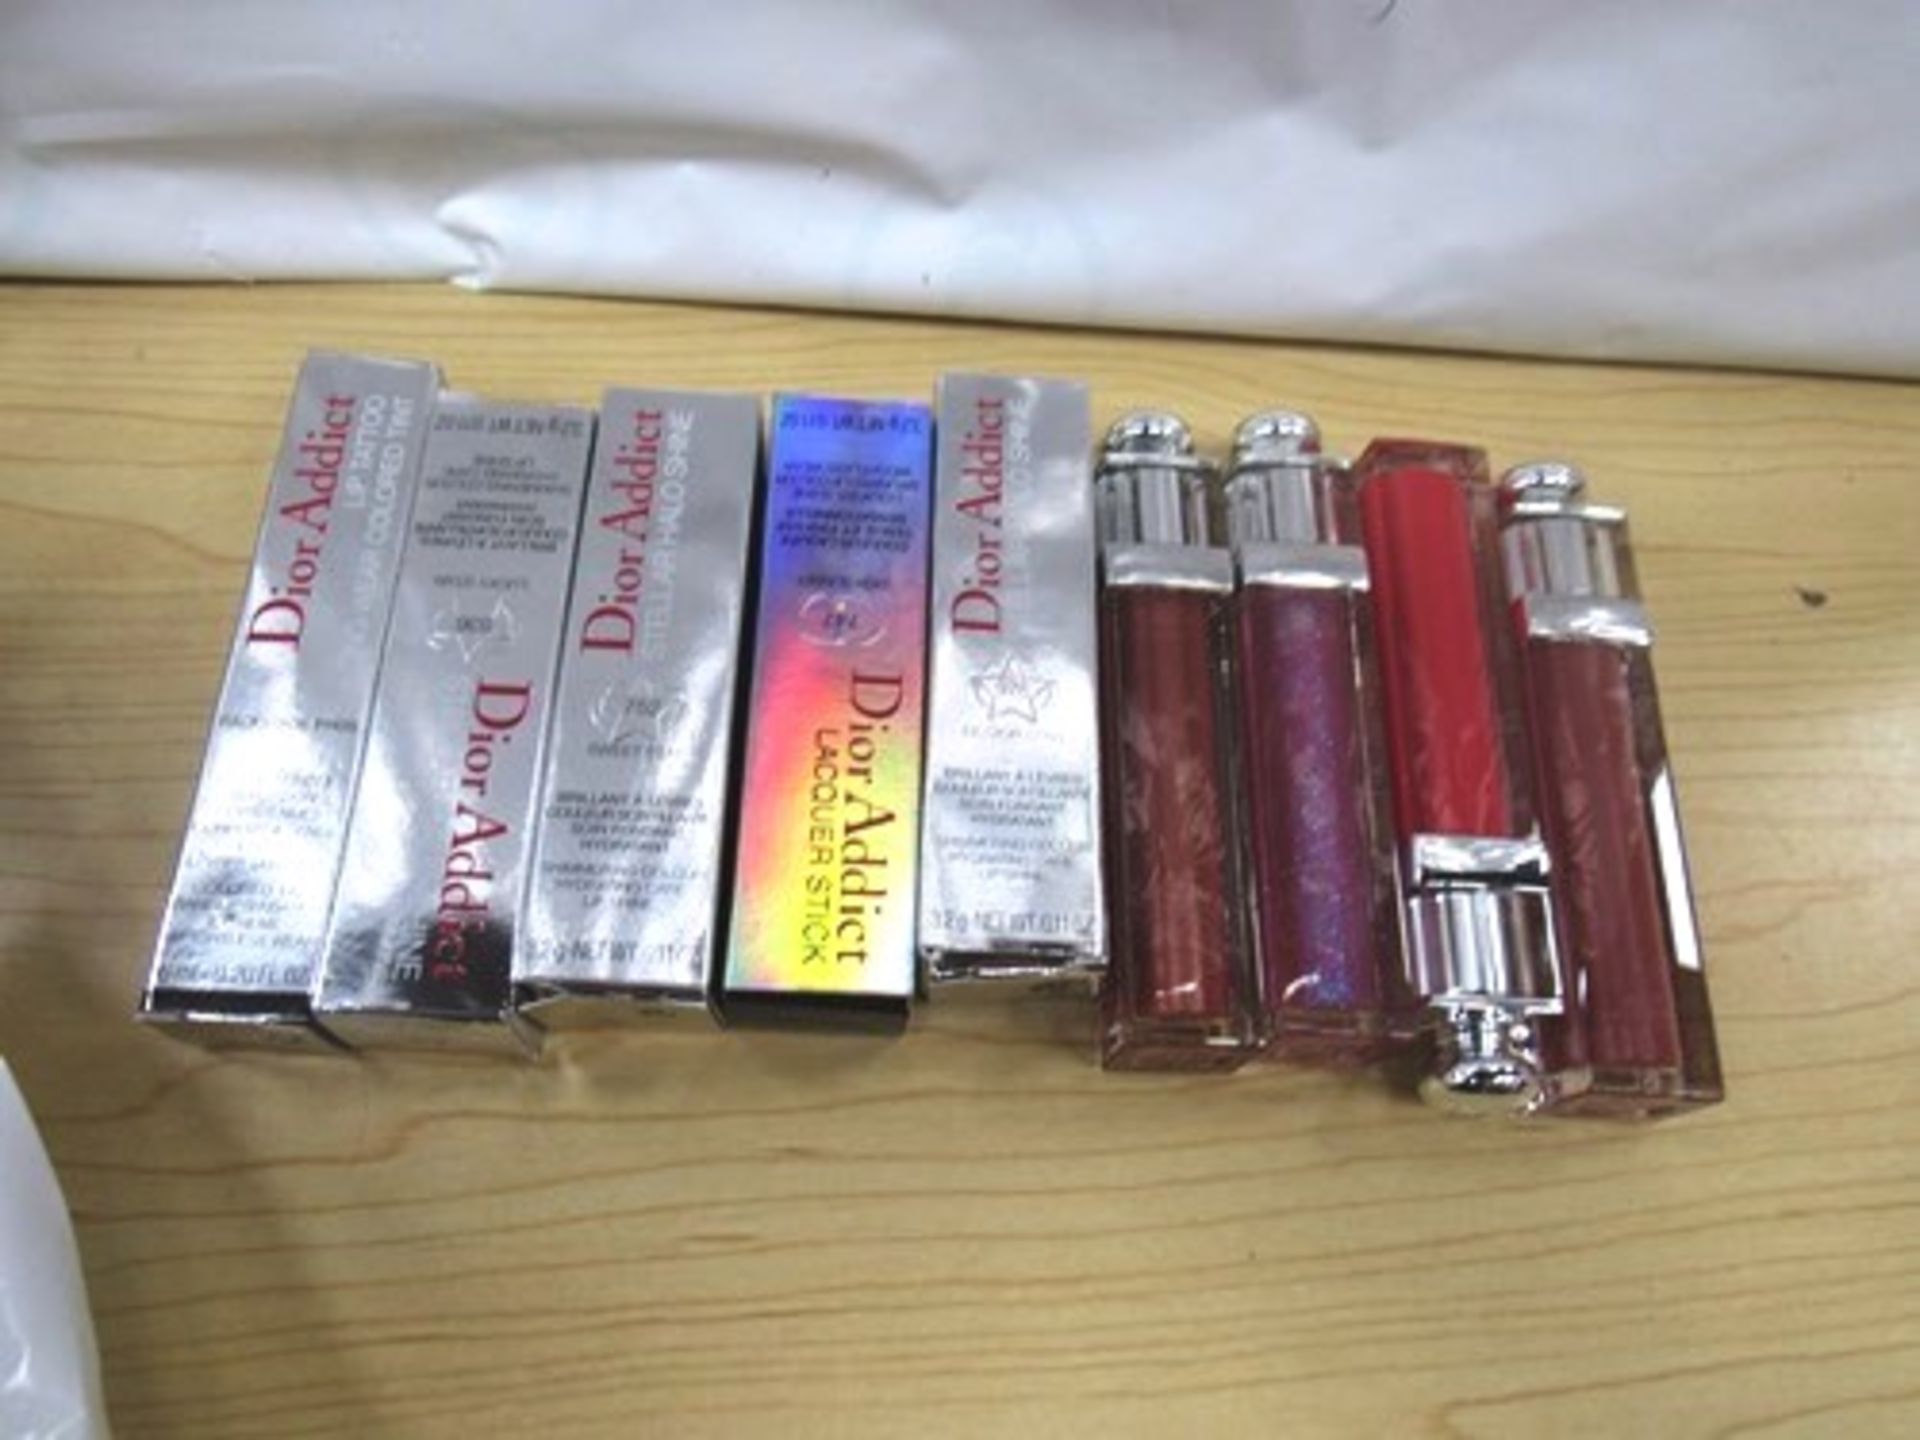 9 x Dior Addict lip products, 4 unboxed - New (C14B)